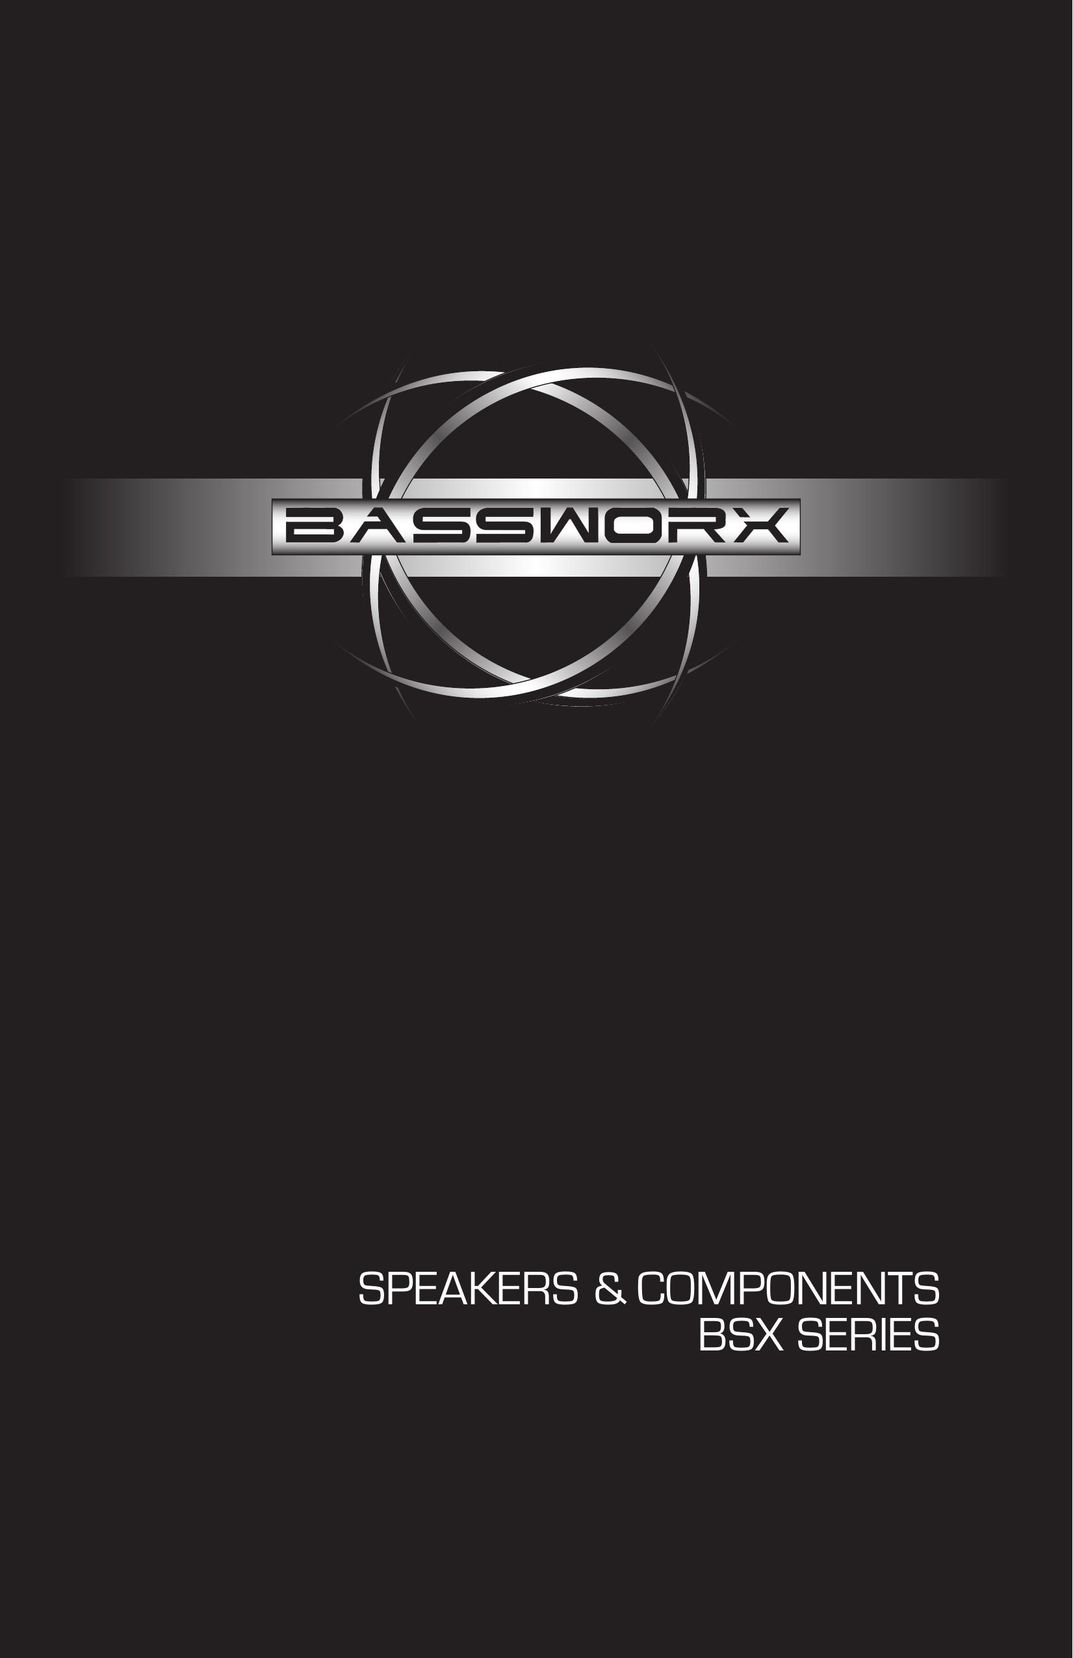 Bassworx BSX60.1 Car Speaker User Manual